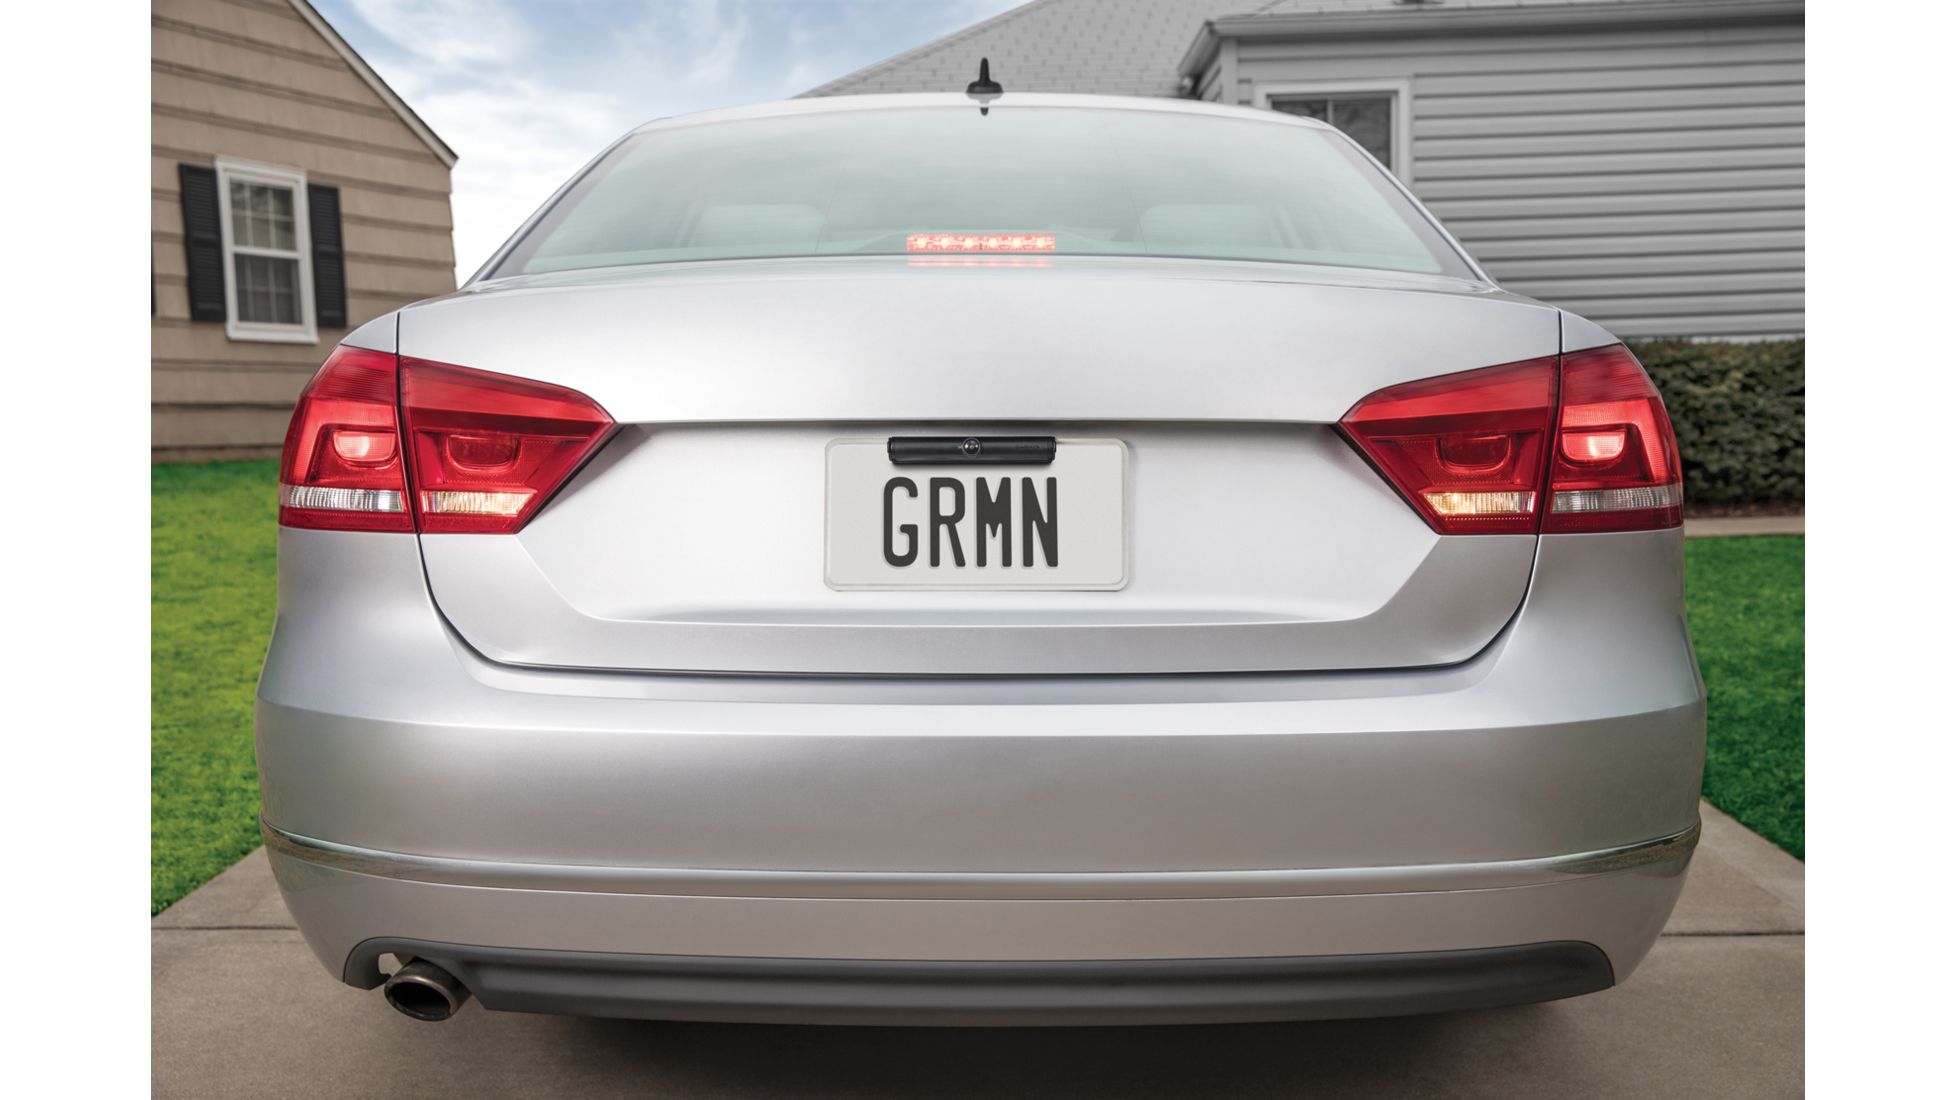 garmin backup camera license plate